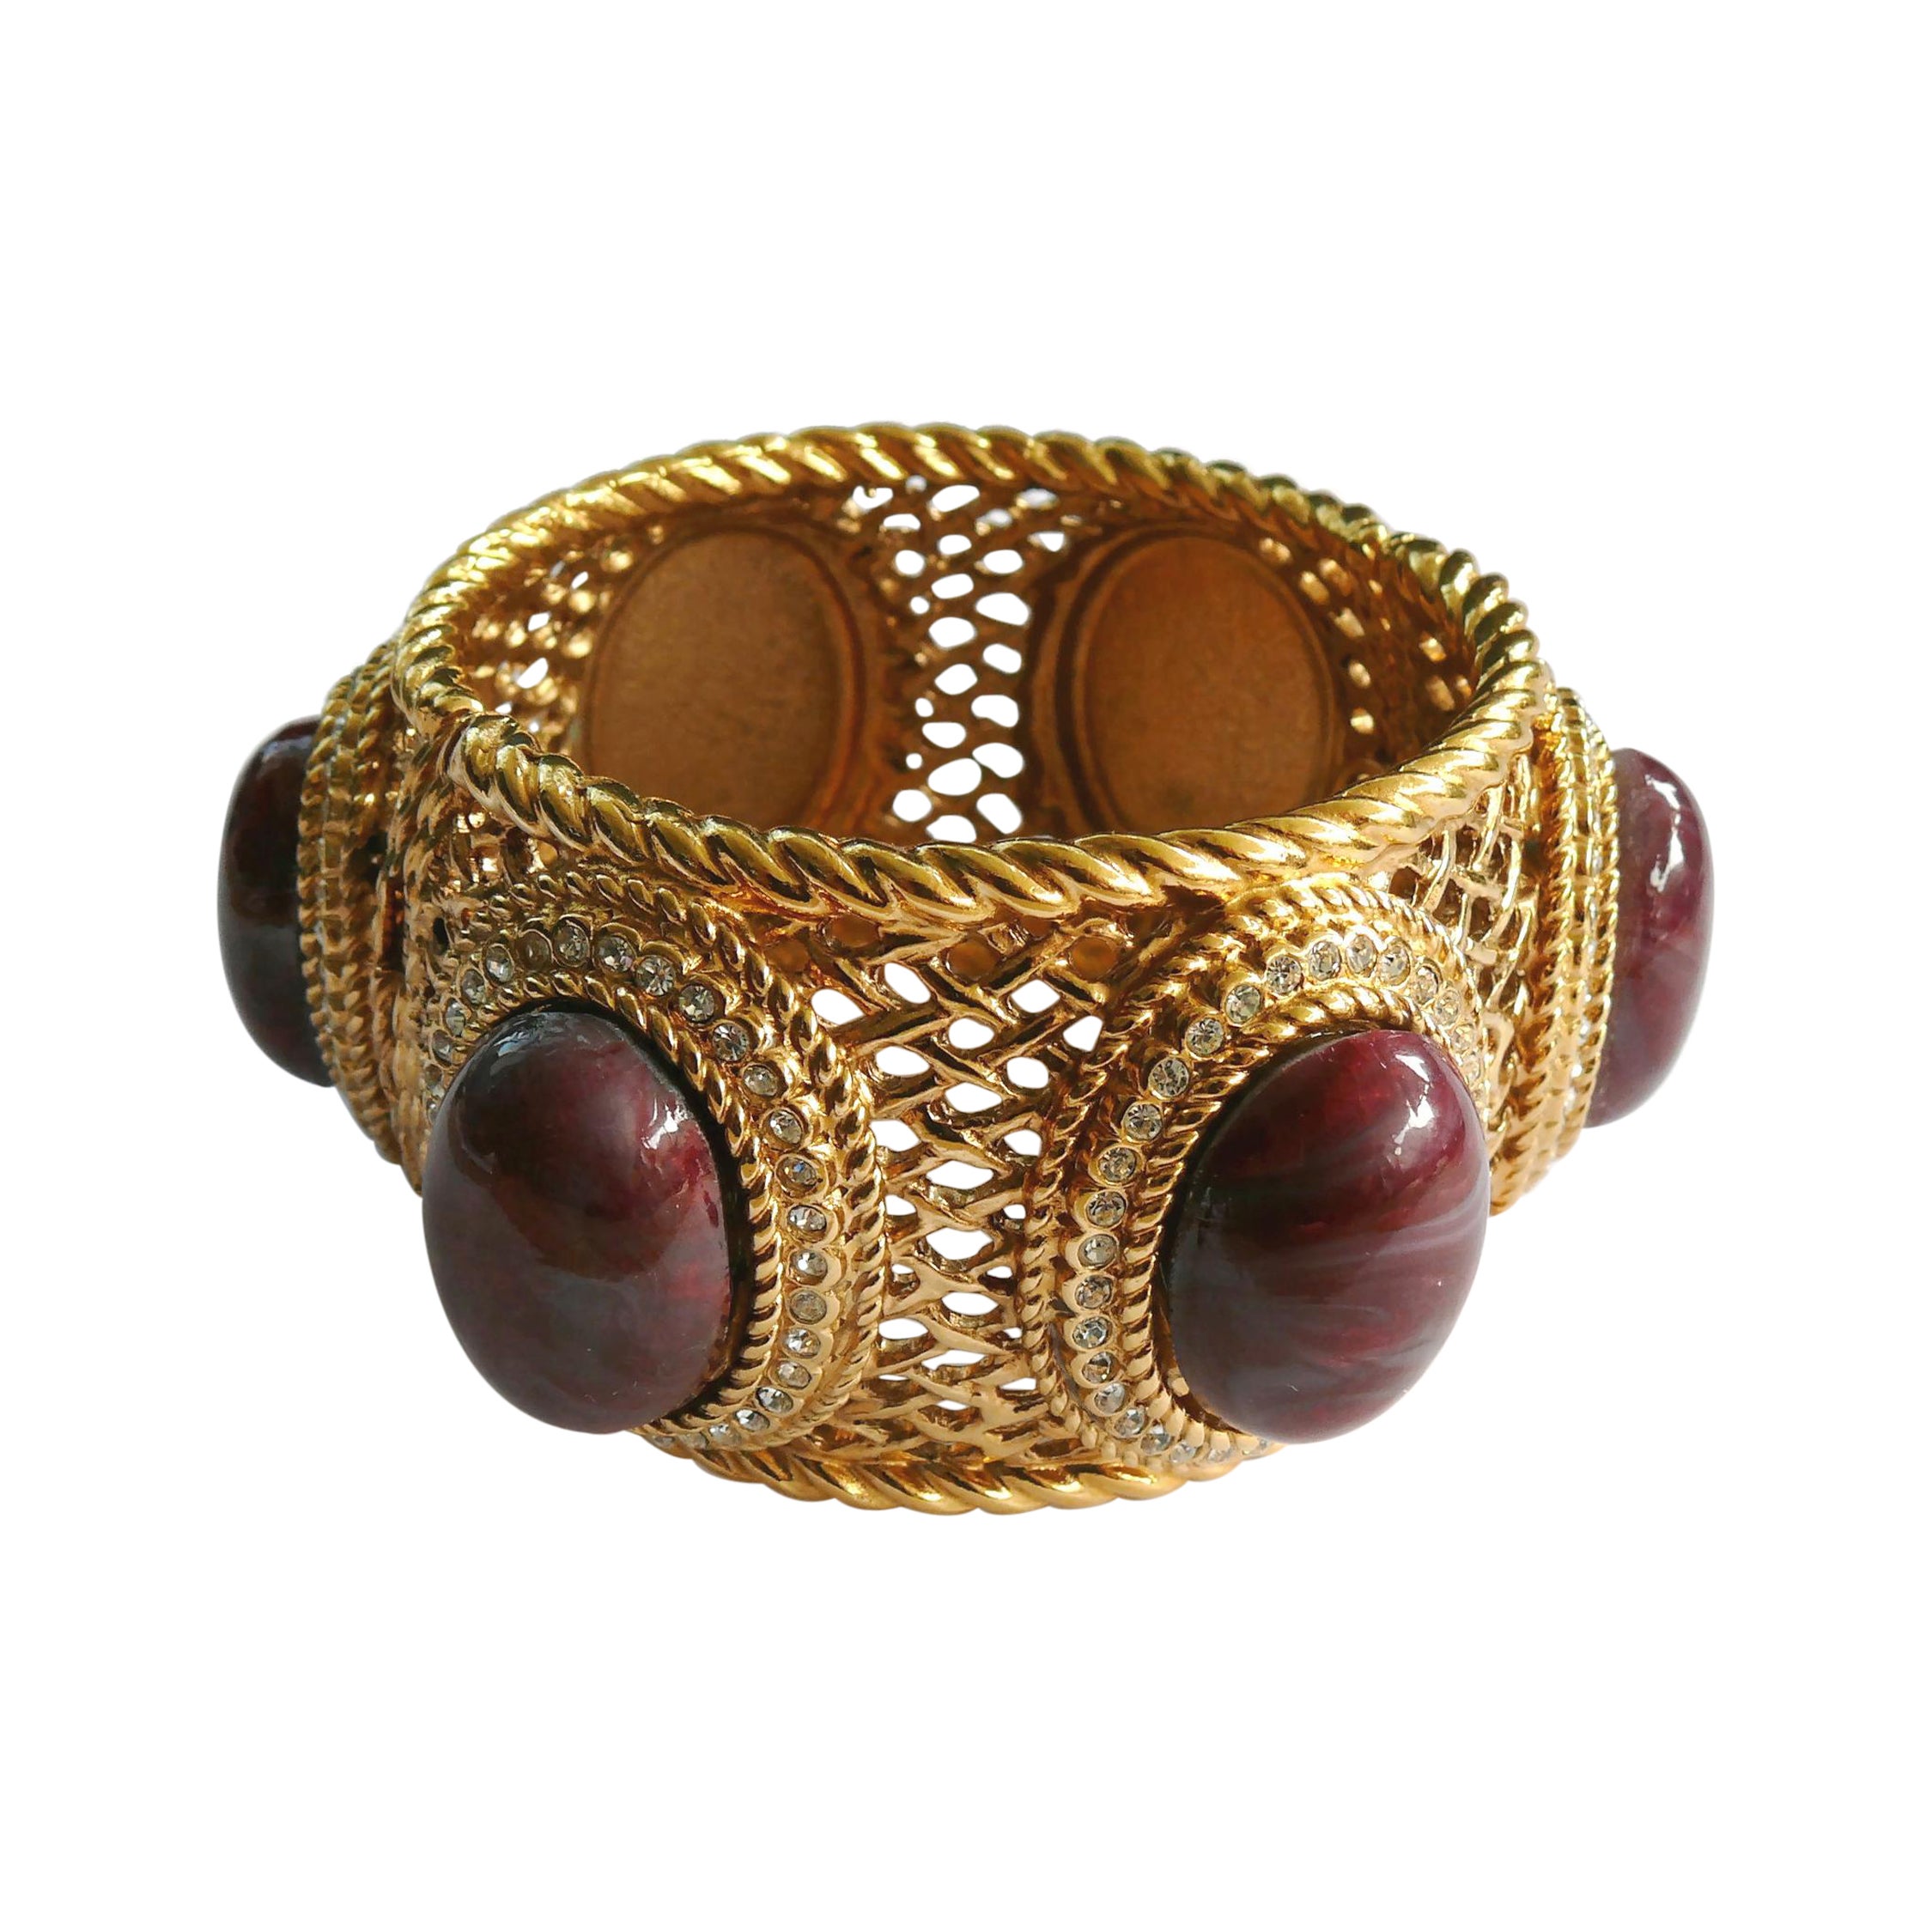 Christian Dior Boutique Massive Jewelled Gold Toned Latticework Cuff Bracelet